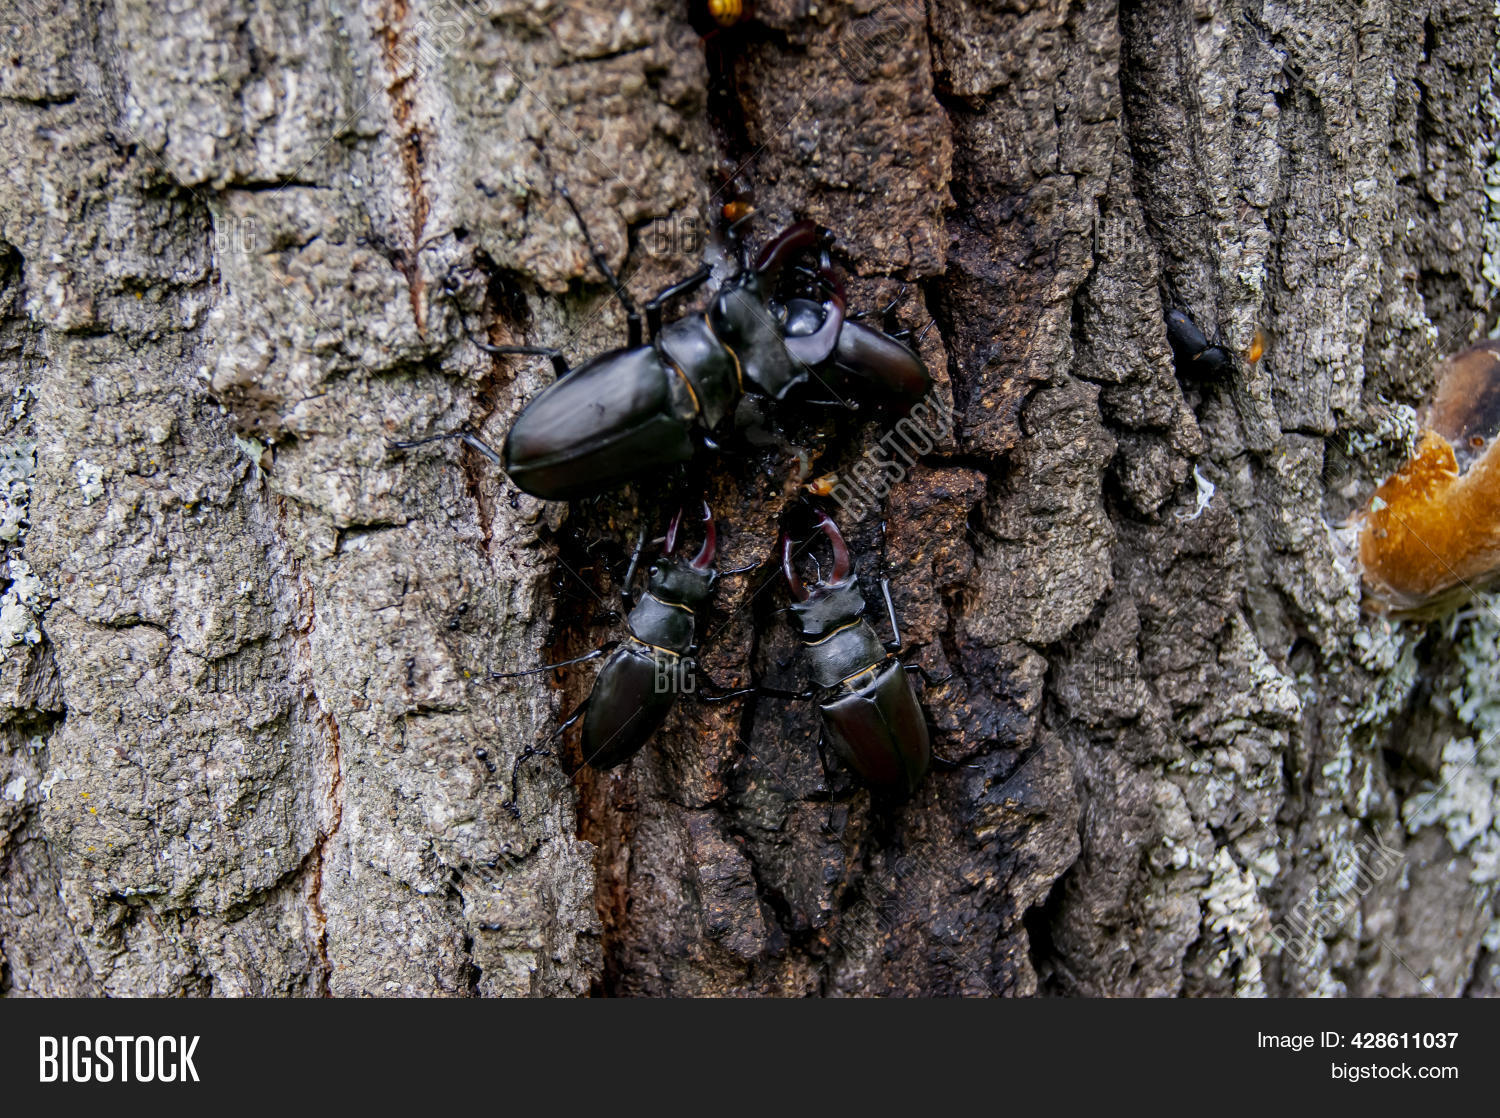 Stag beetle beetle image photo free trial bigstock